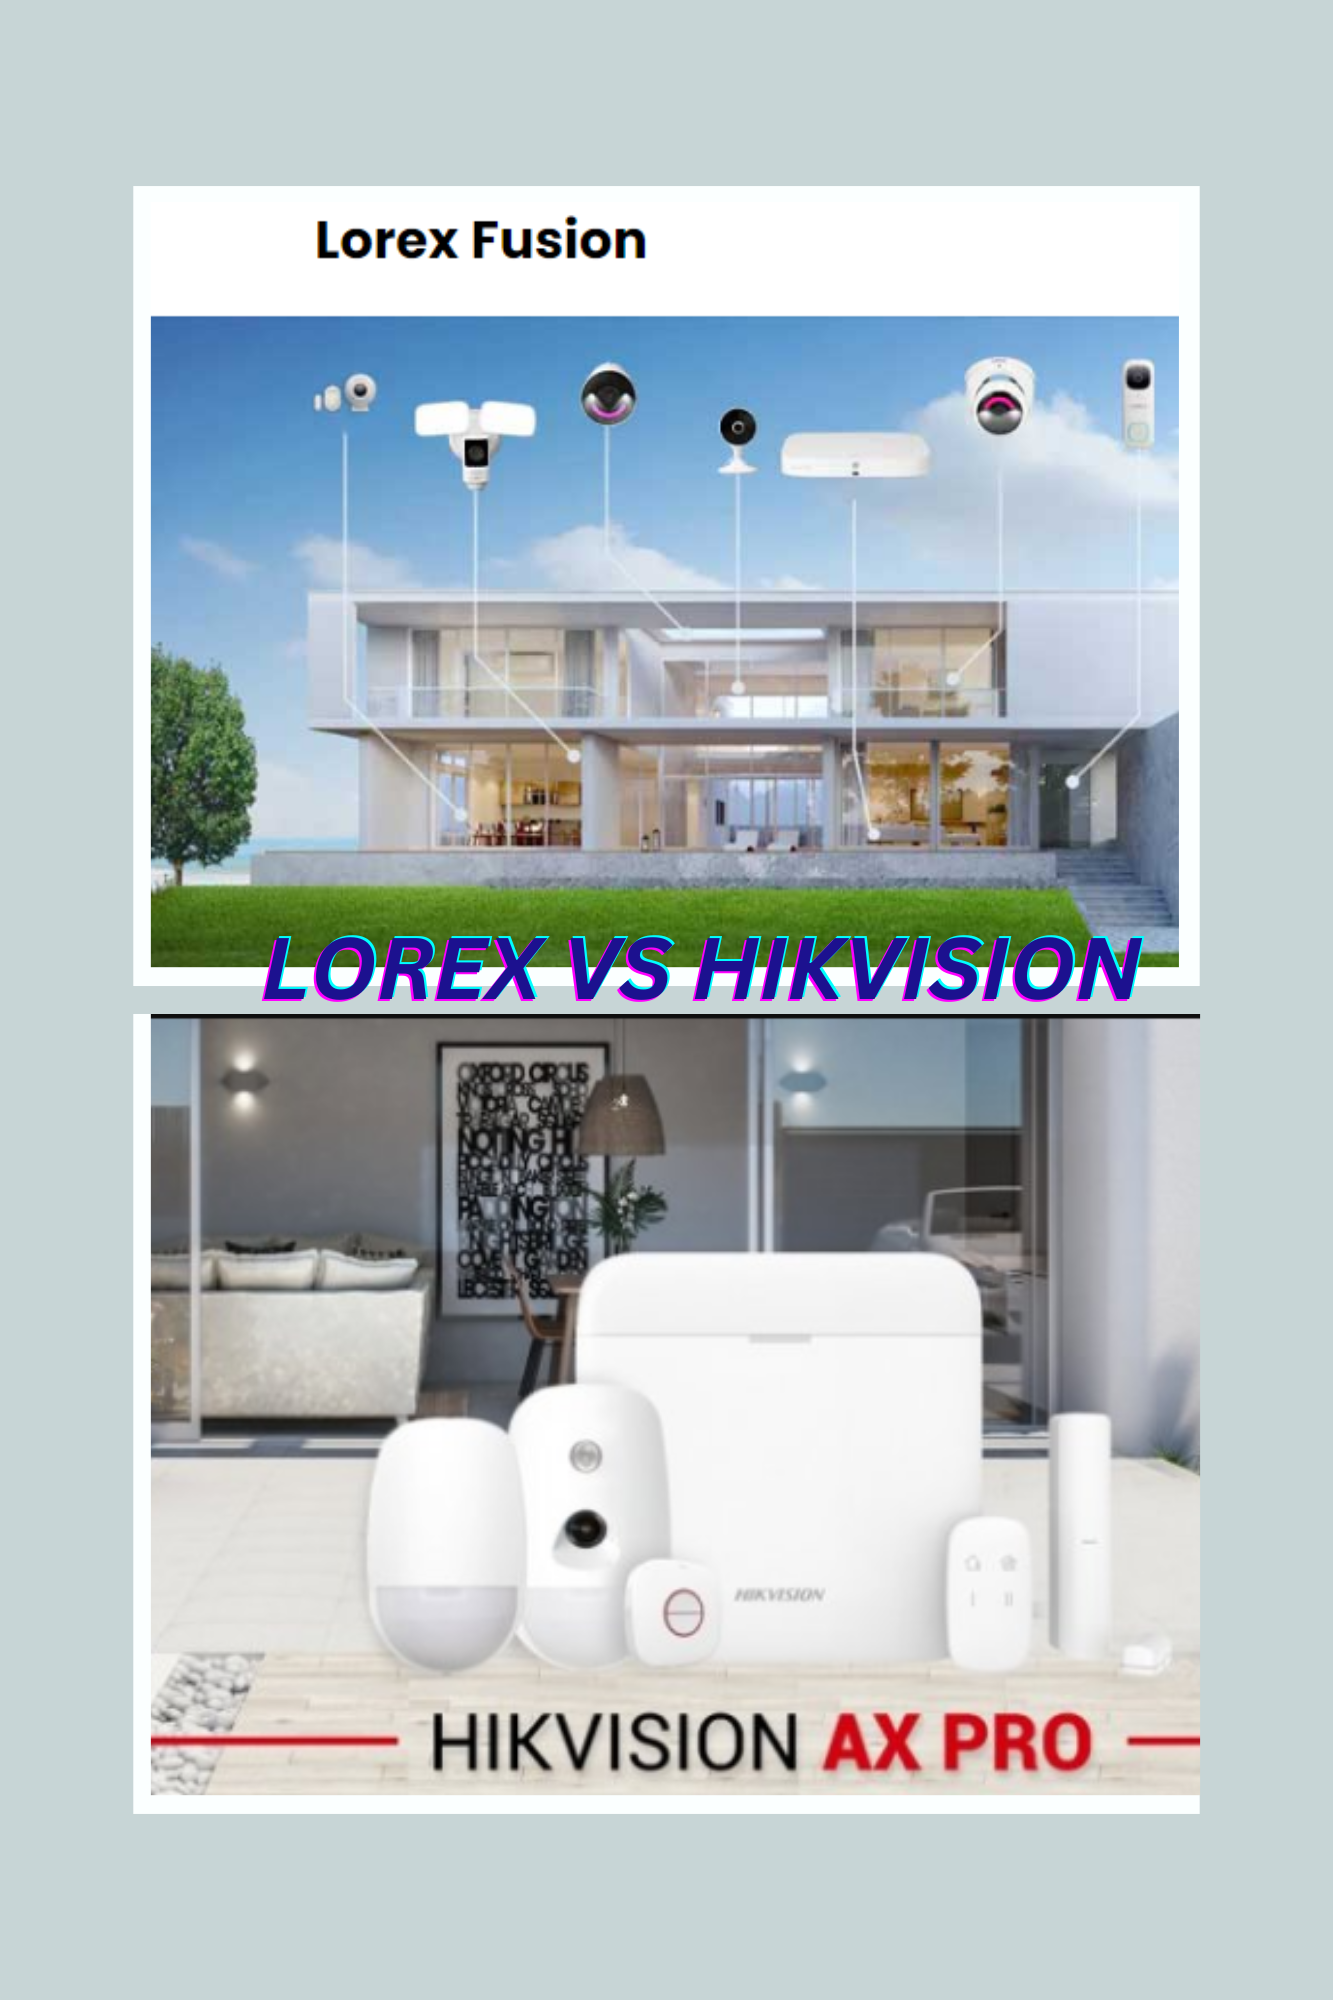 Hikvision vs Lorex security system comparison